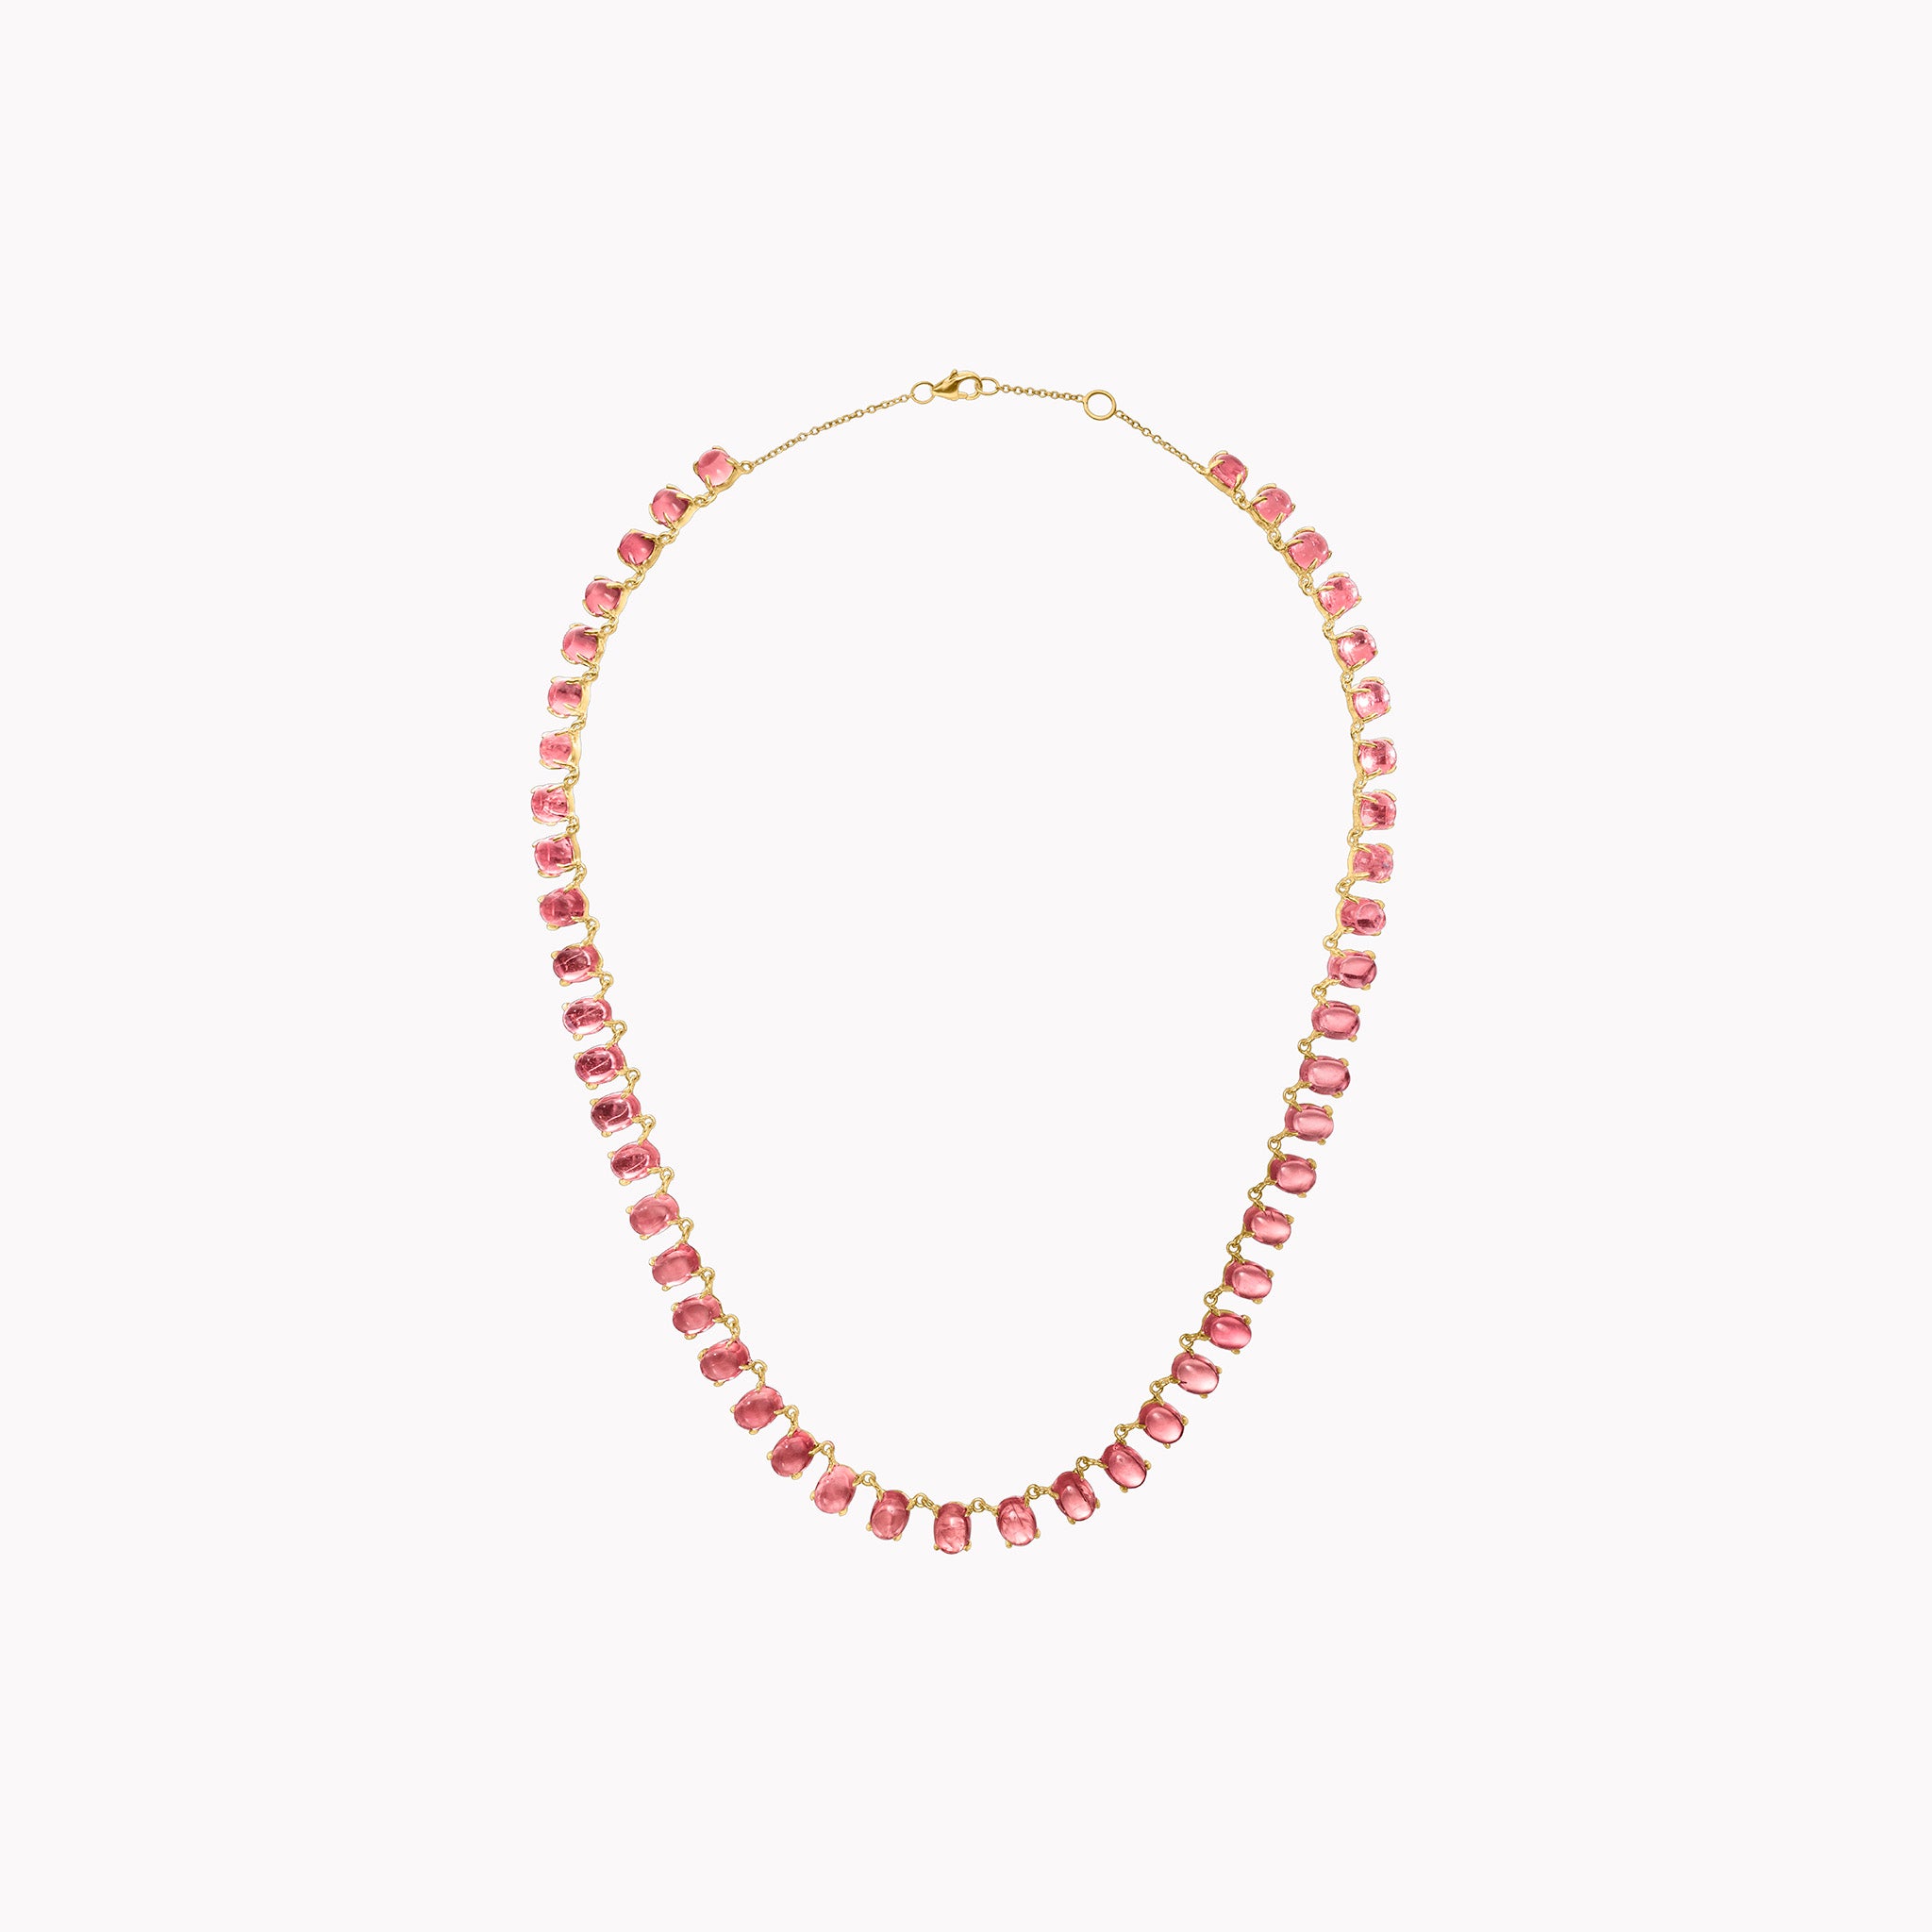 The Lena Peach Tourmaline Necklace